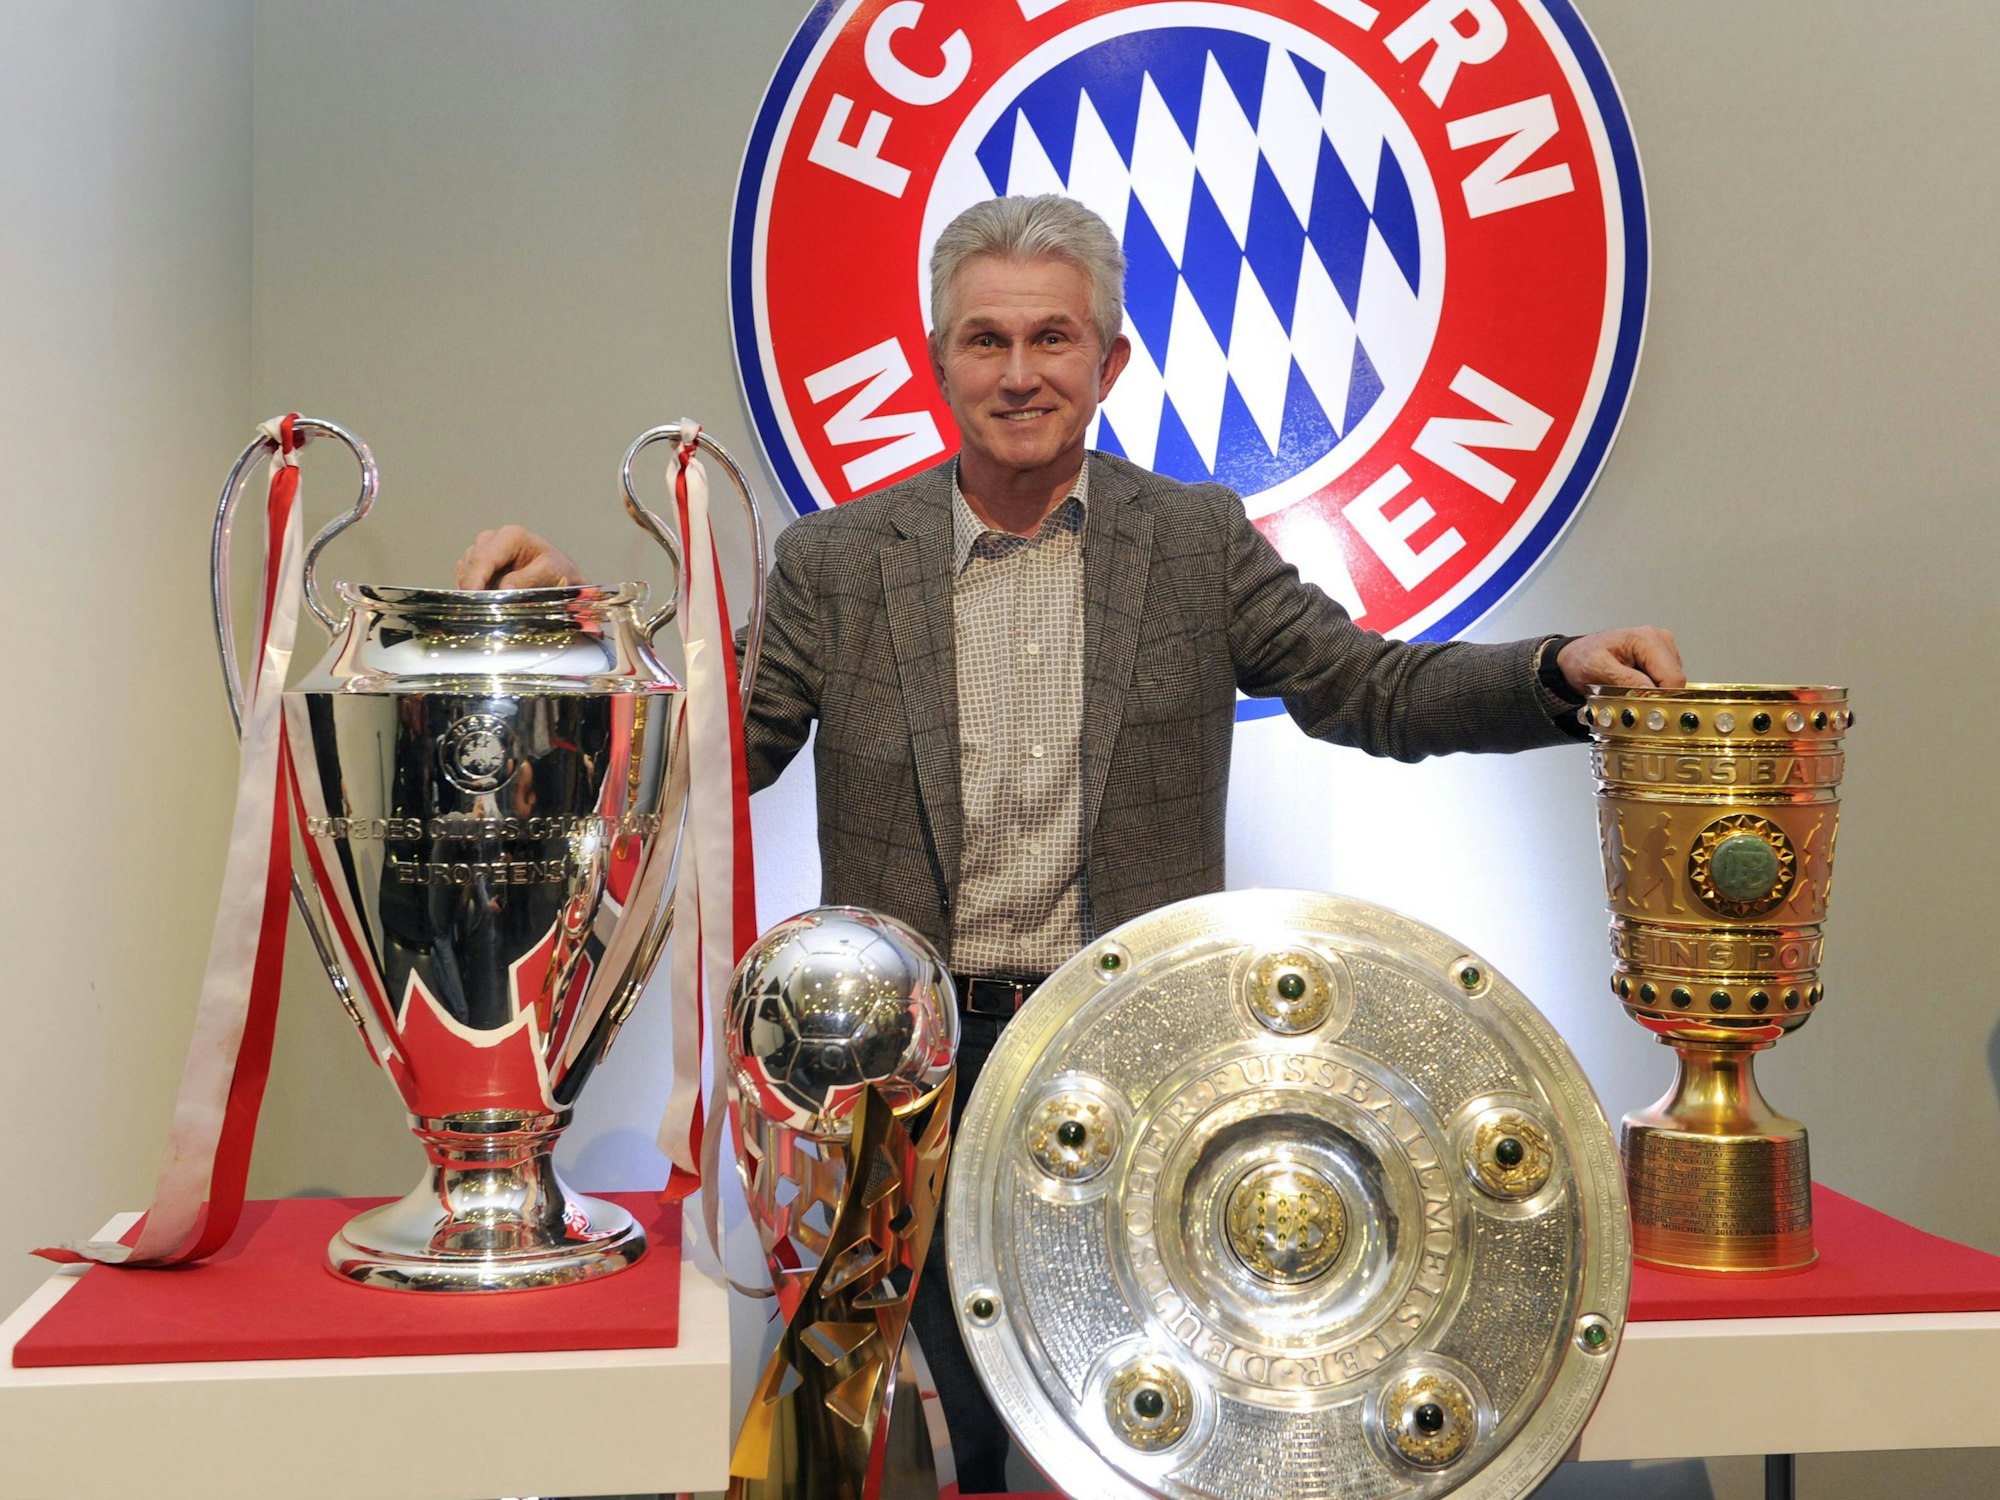 Jupp Heynckes (Trainer Bayern München), mit den gewonnenen Trophäen: Champions League, DFL Supercup, Meisterschale, DFB Pokal.